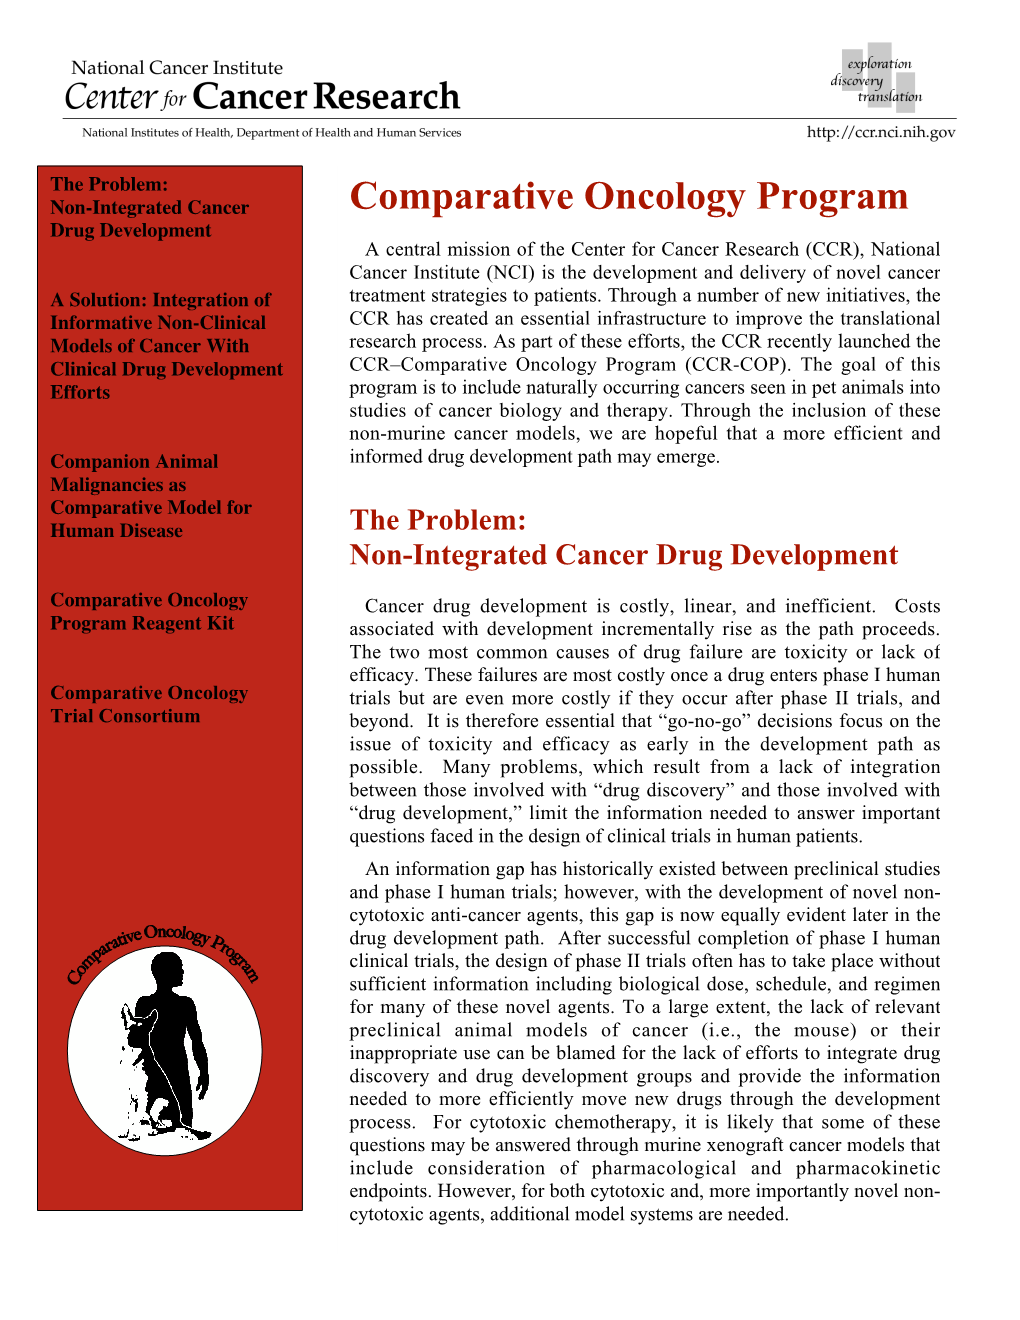 Comparative Oncology Program